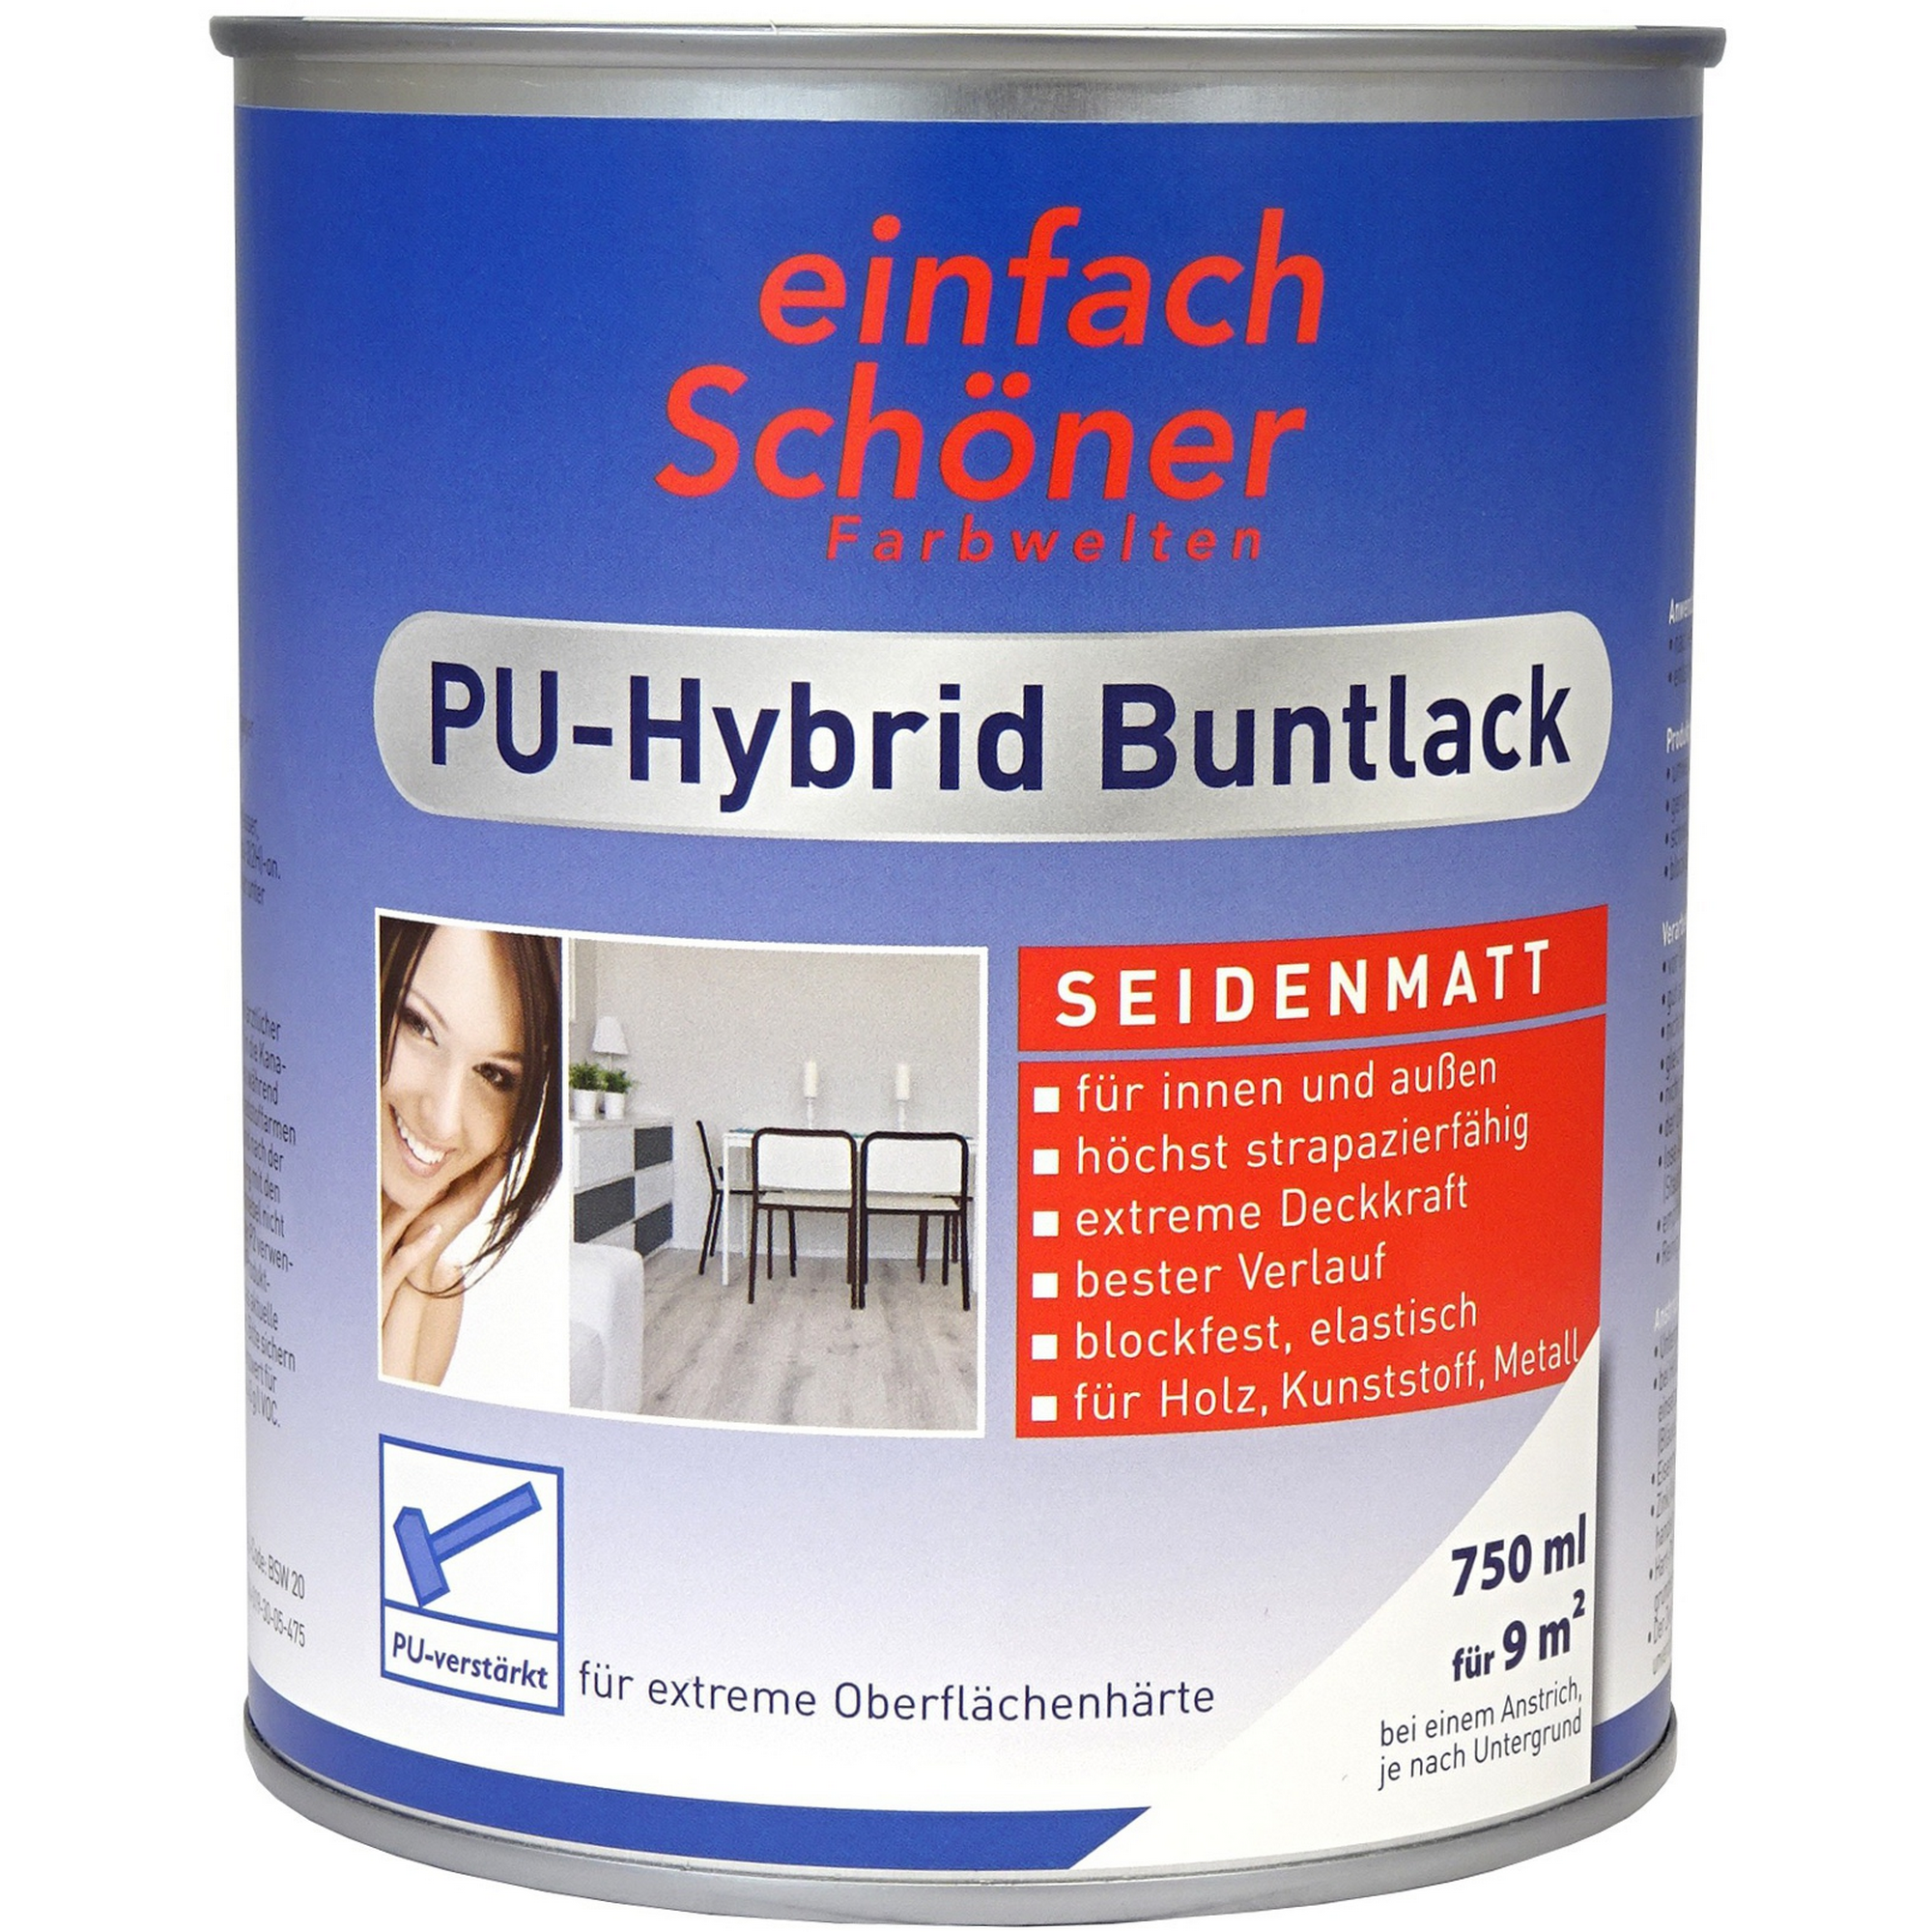 PU-Hybrid Buntlack anthrazitgrau seidenmatt 750 ml + product picture